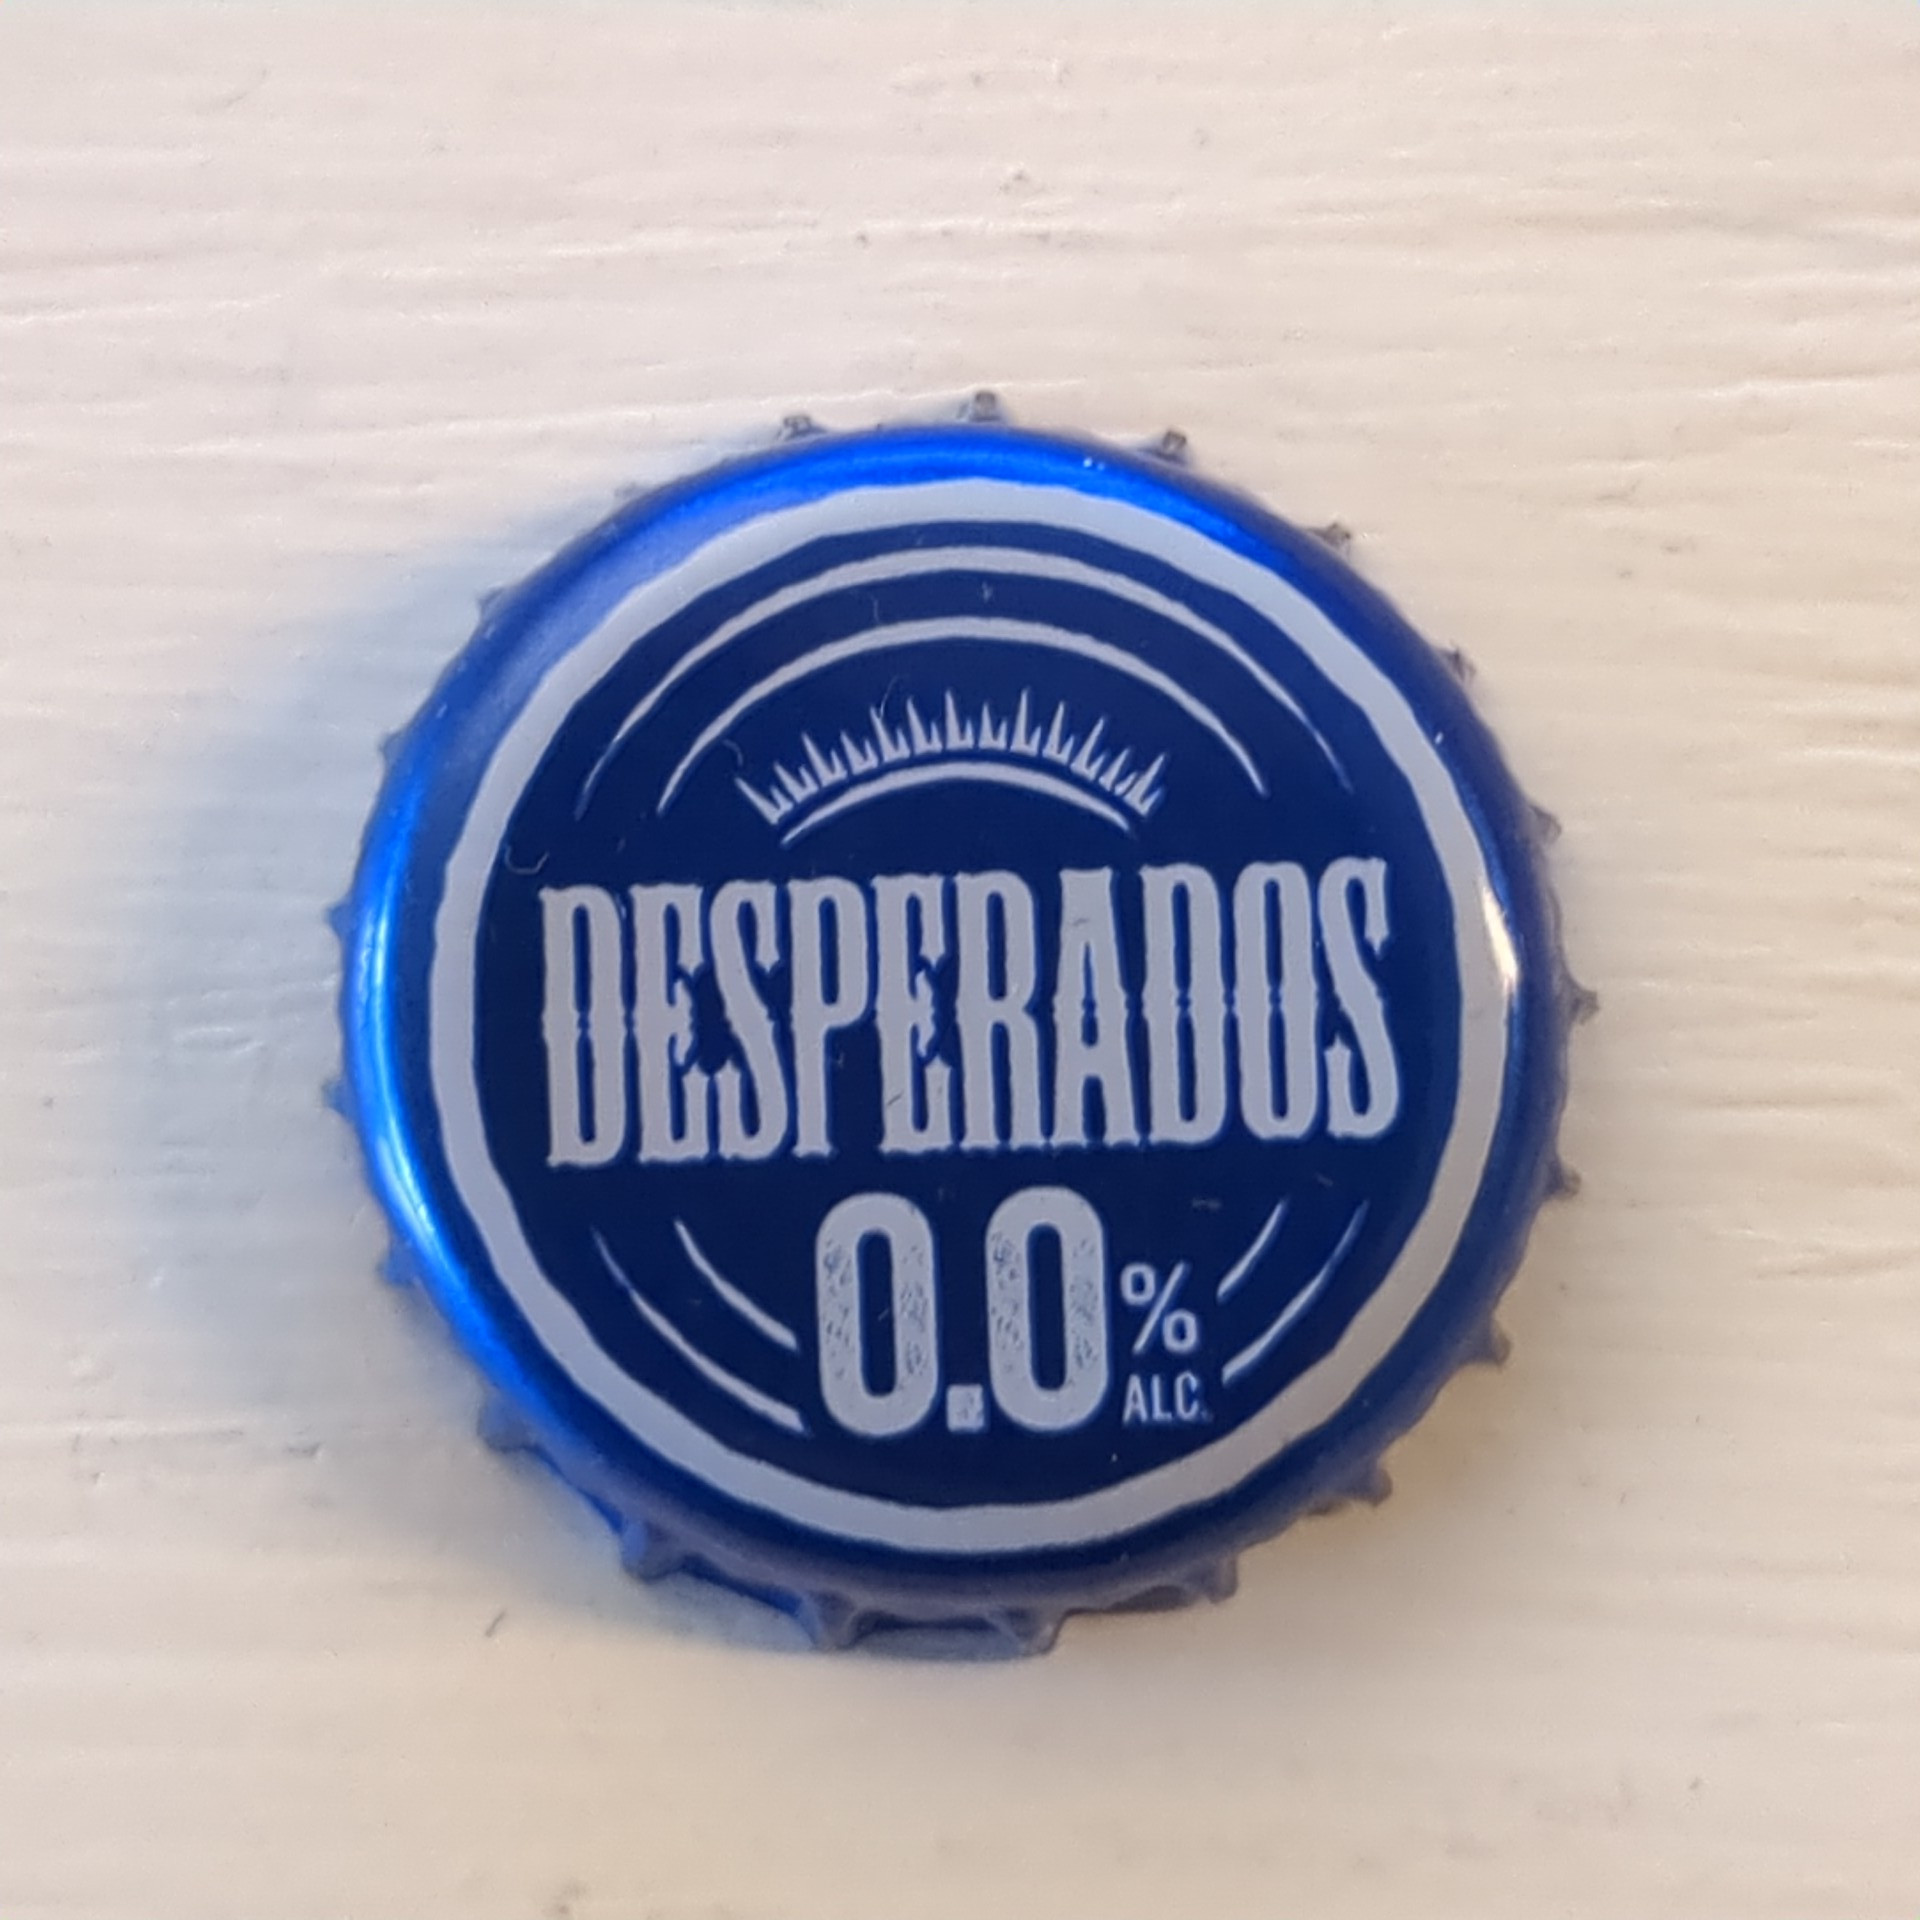 Desperados 0,0%